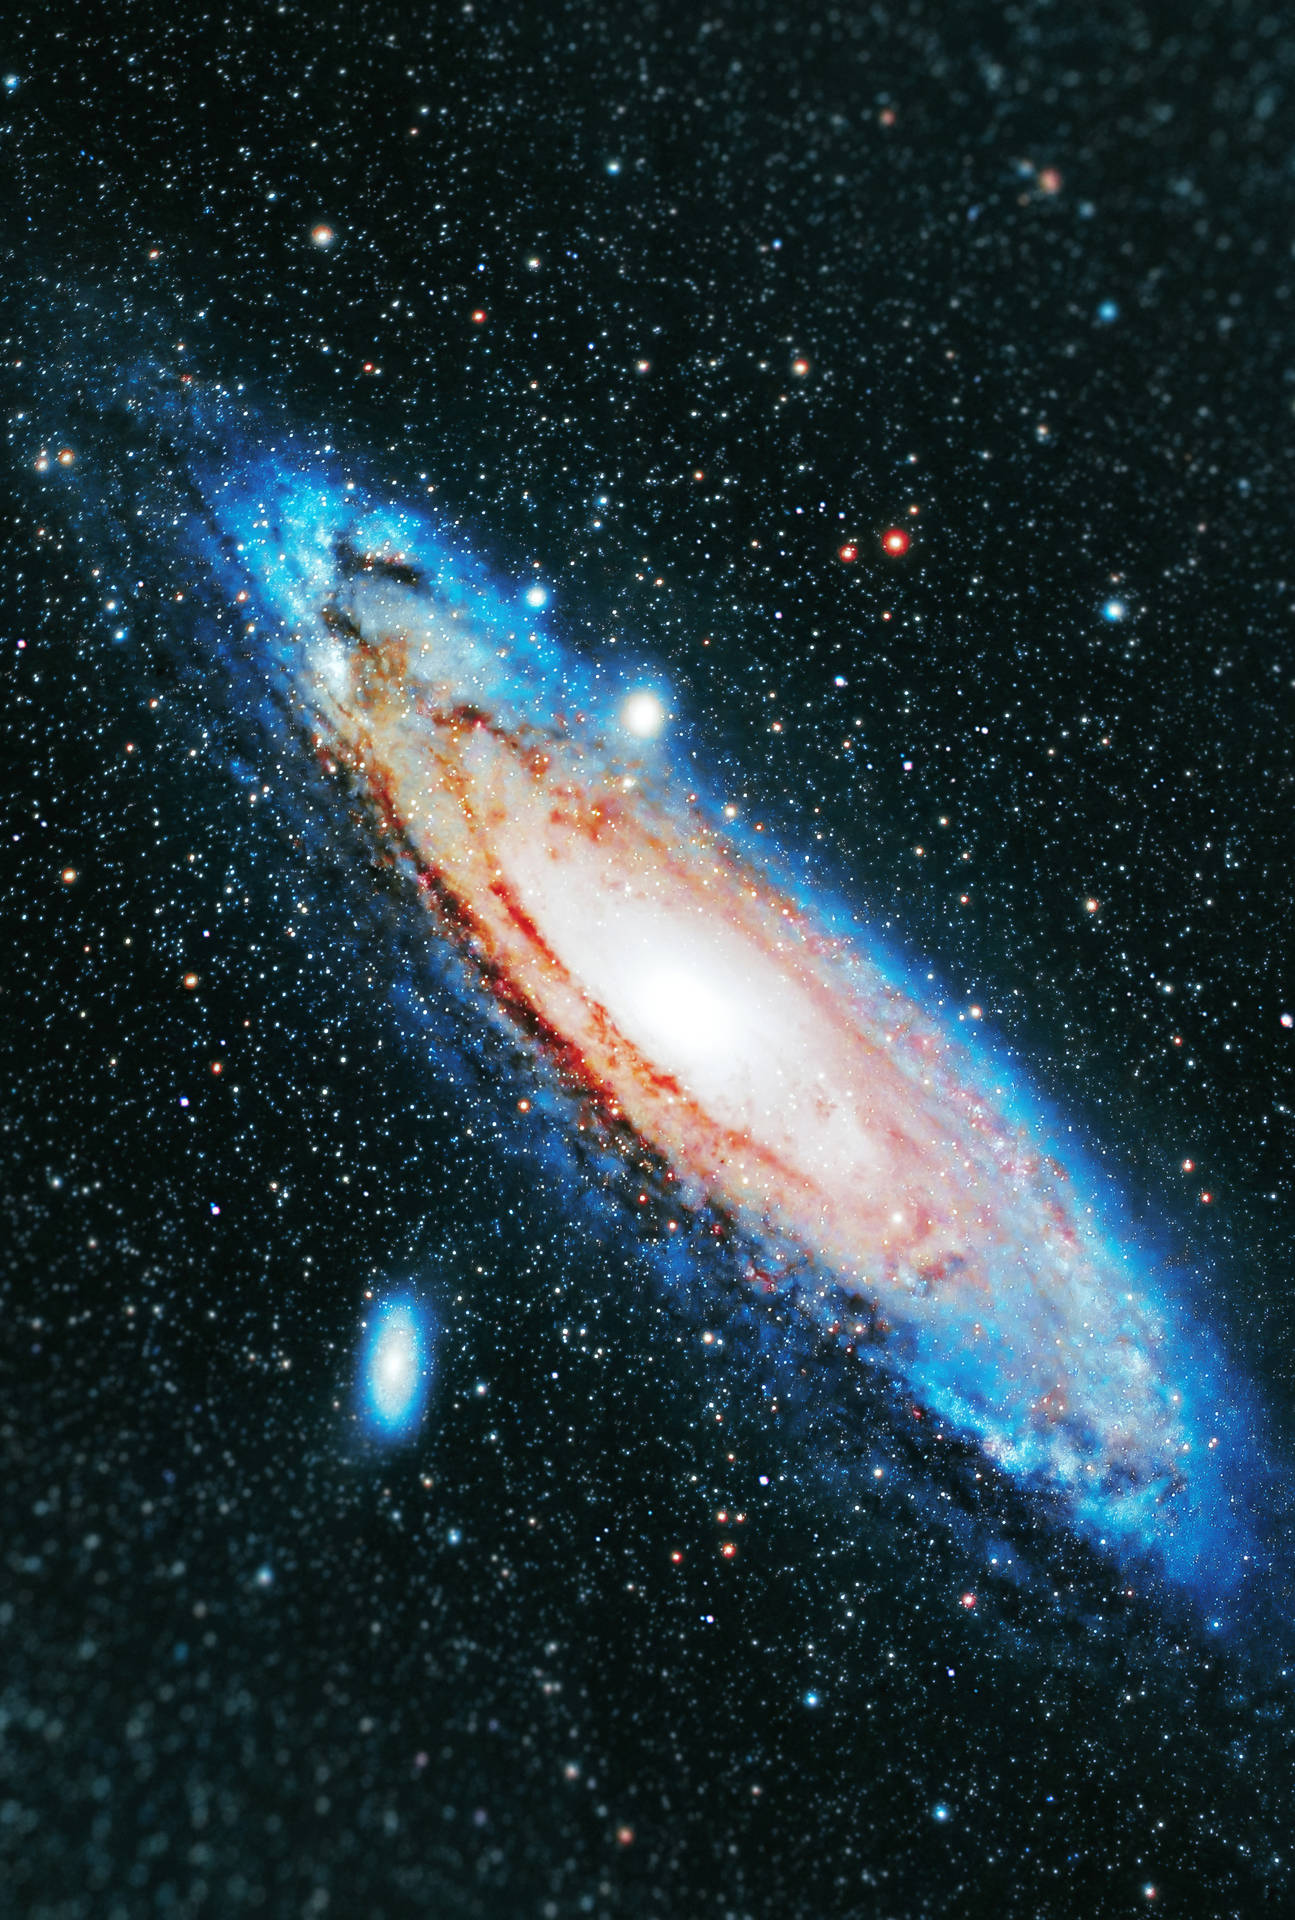 Andromedagalaxen I Rymden - Universal (computer/mobile) Bakgrundsbild. Wallpaper